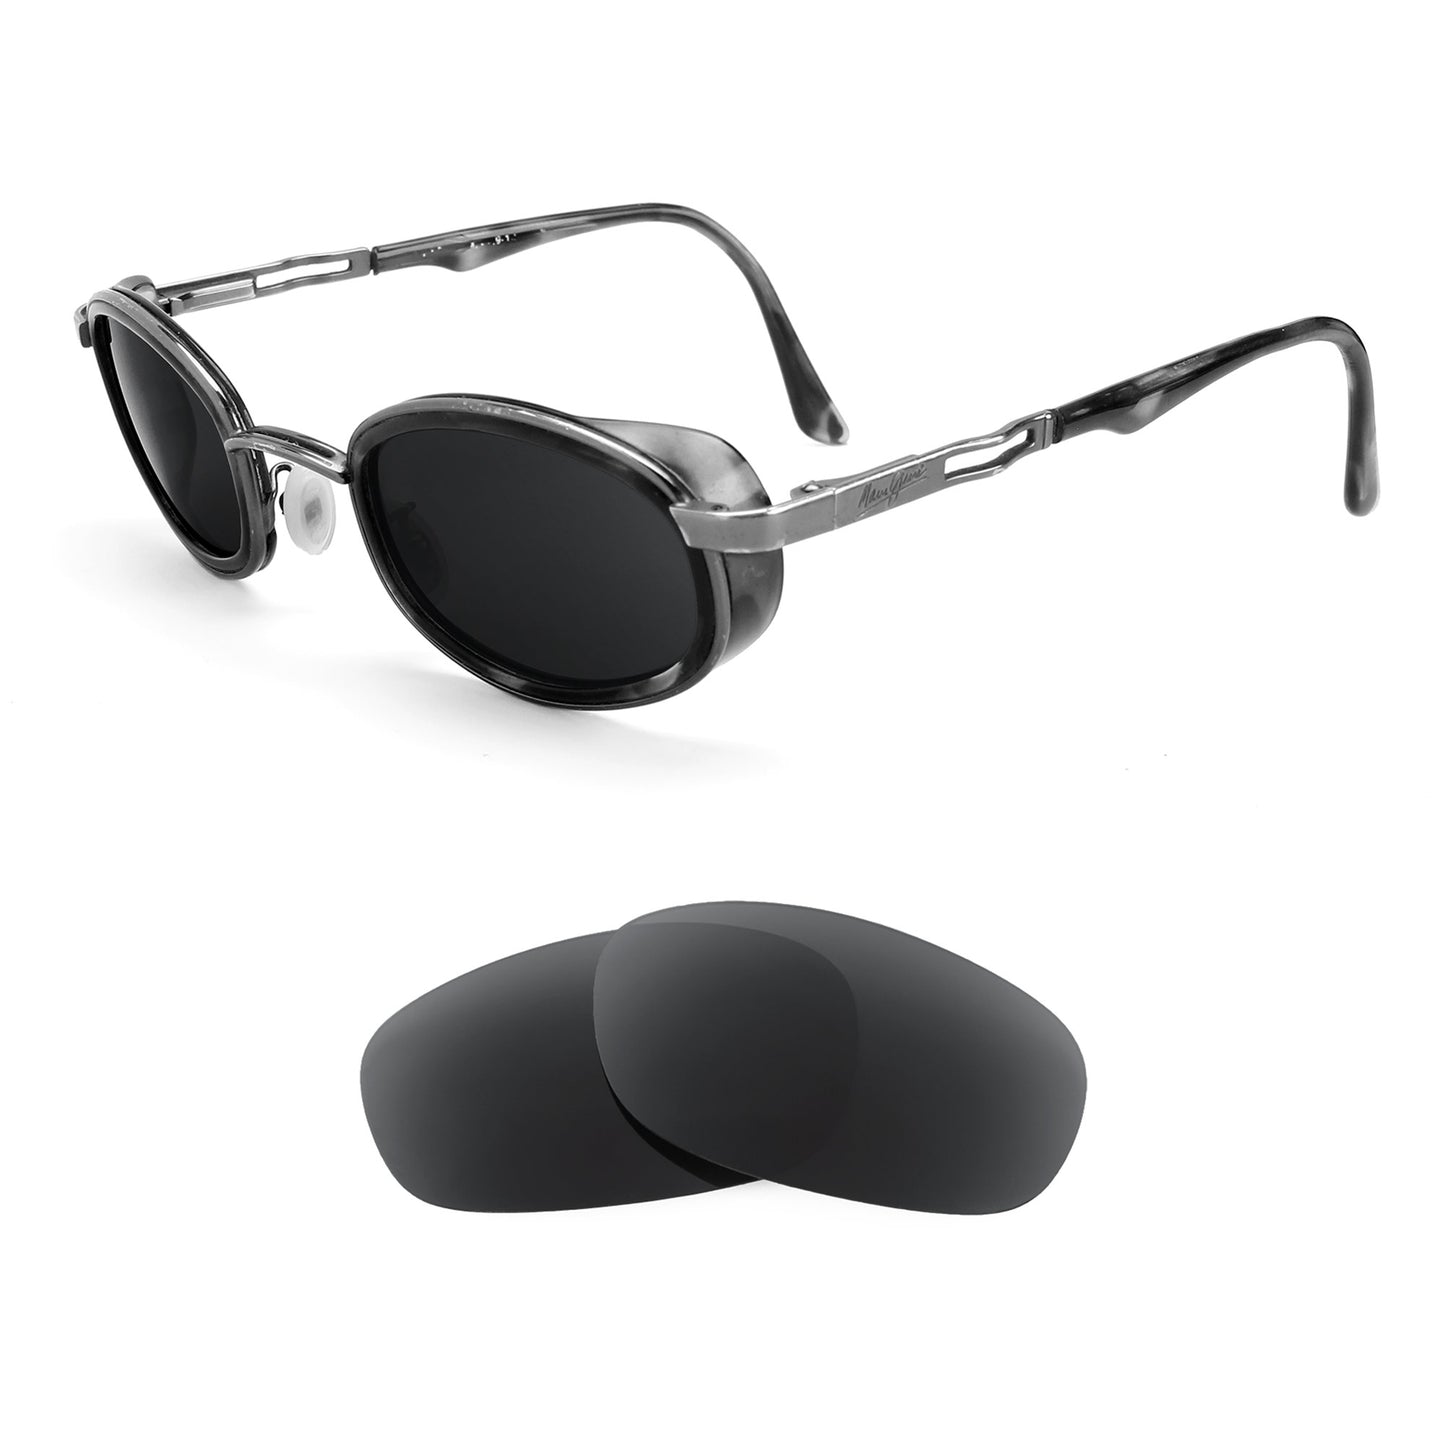 Maui Jim Makana MJ139 sunglasses with replacement lenses